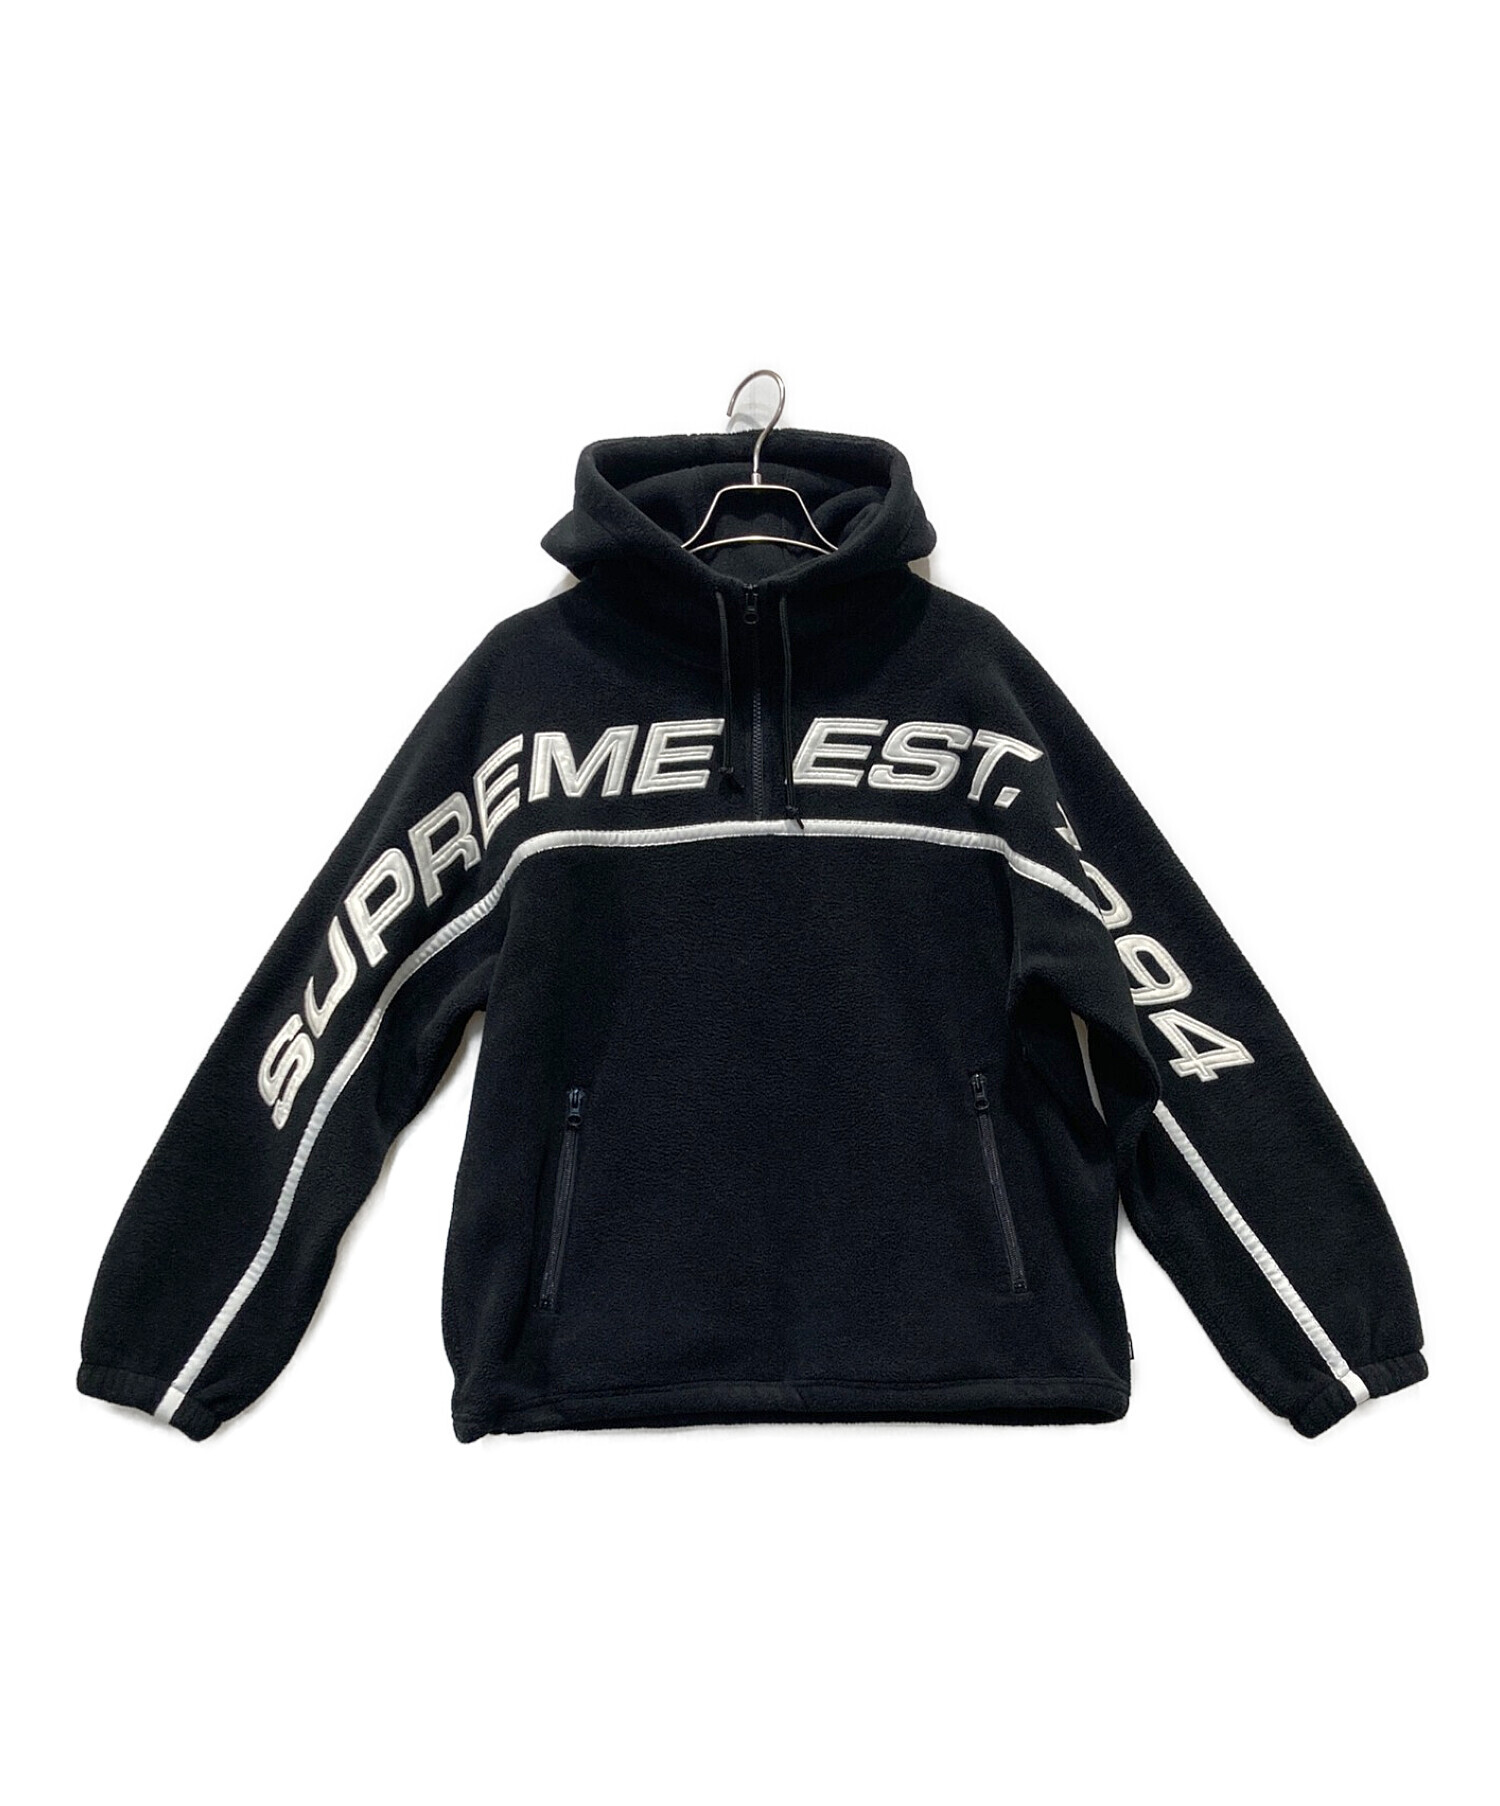 supreme Polartec® Hooded Sweatshirt S 新品